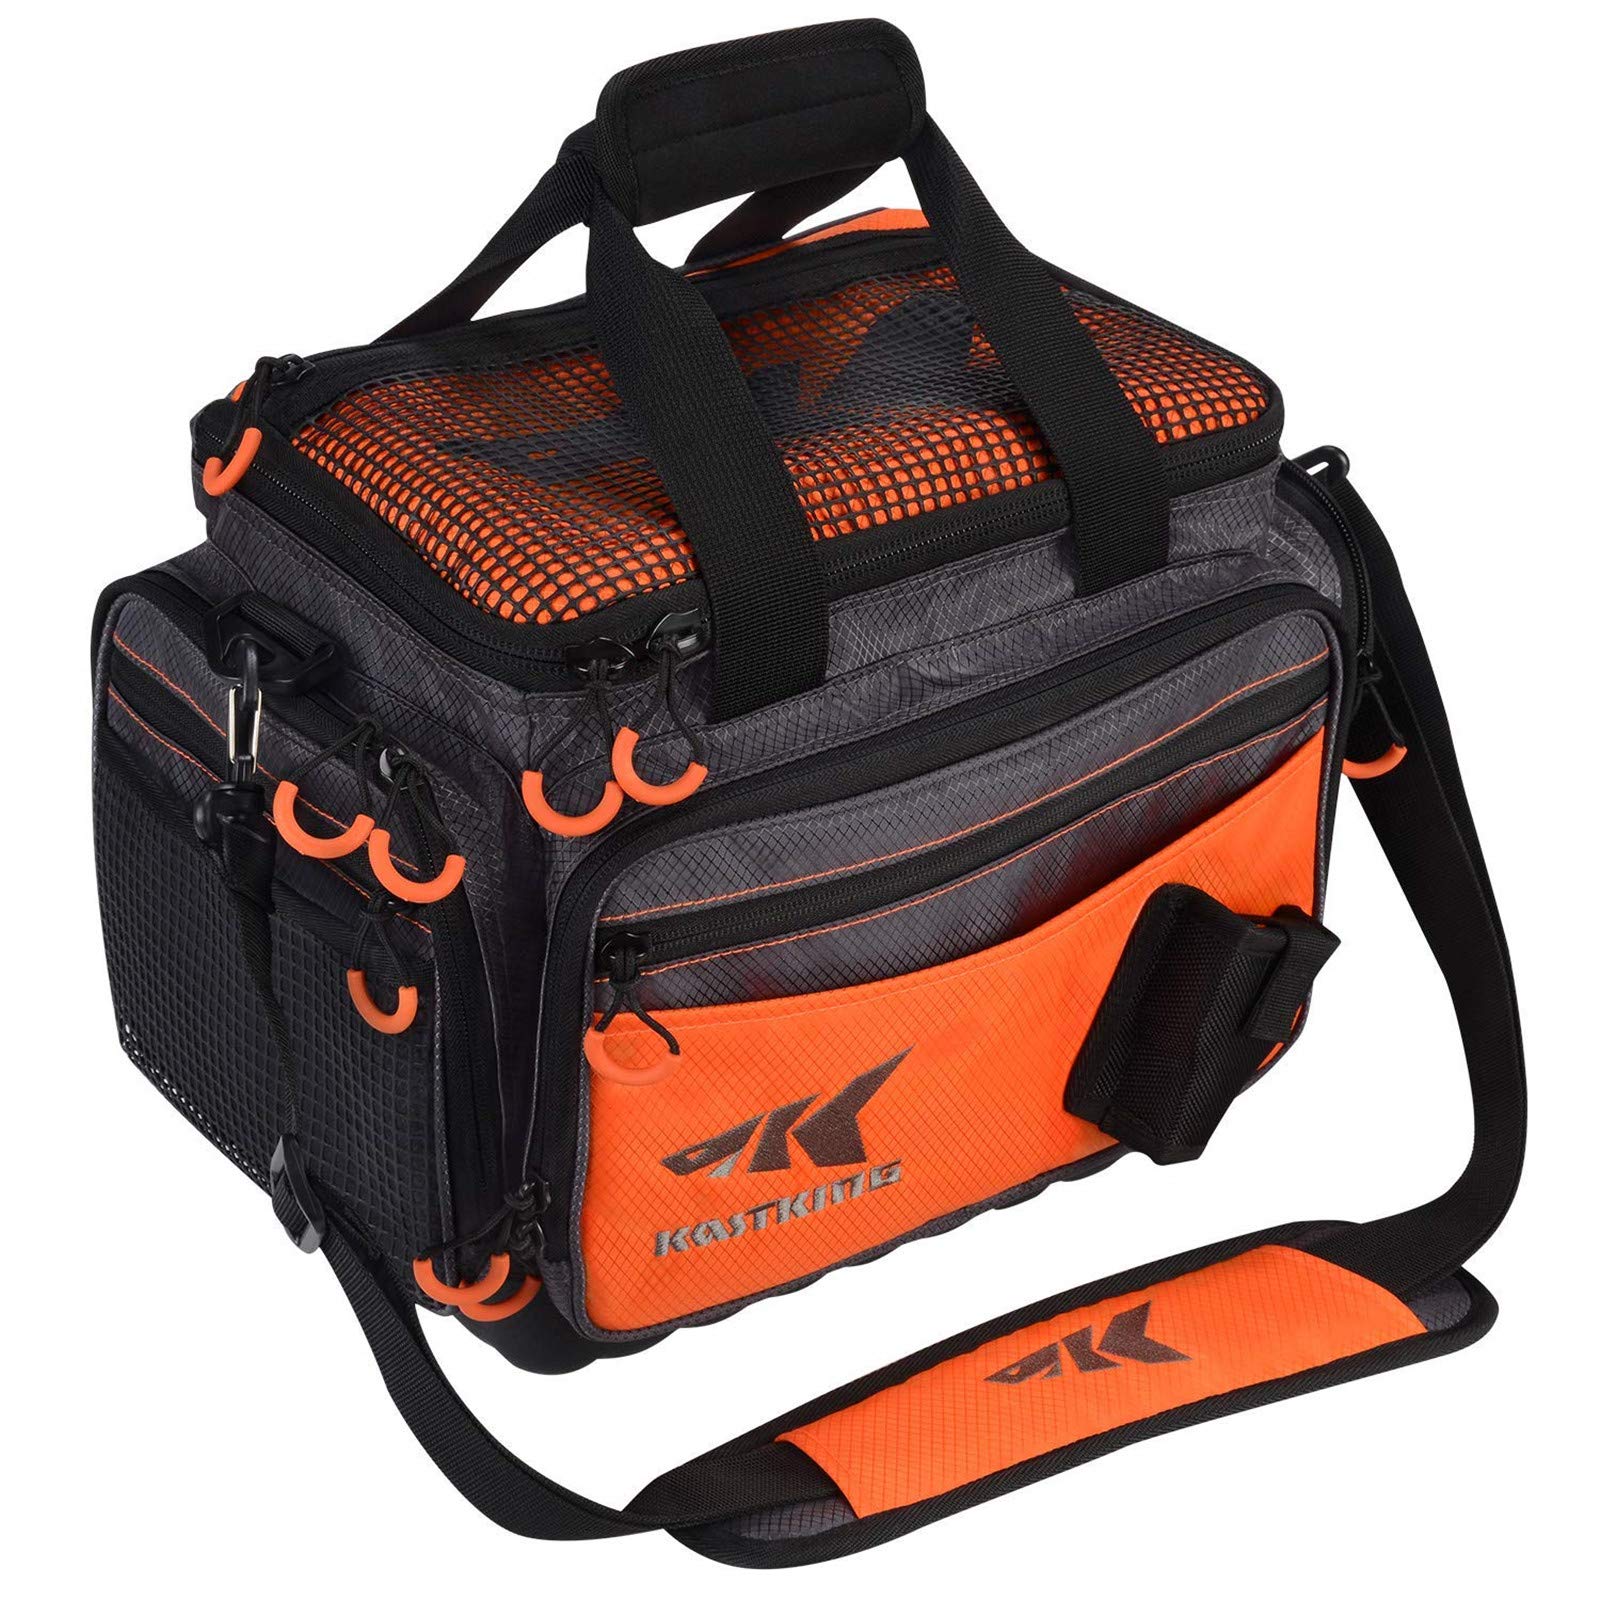 KastKing Fishing Gear & Tackle Bags - Saltwater Resistant Fishing Bags - Fishing Tackle Storage Bags